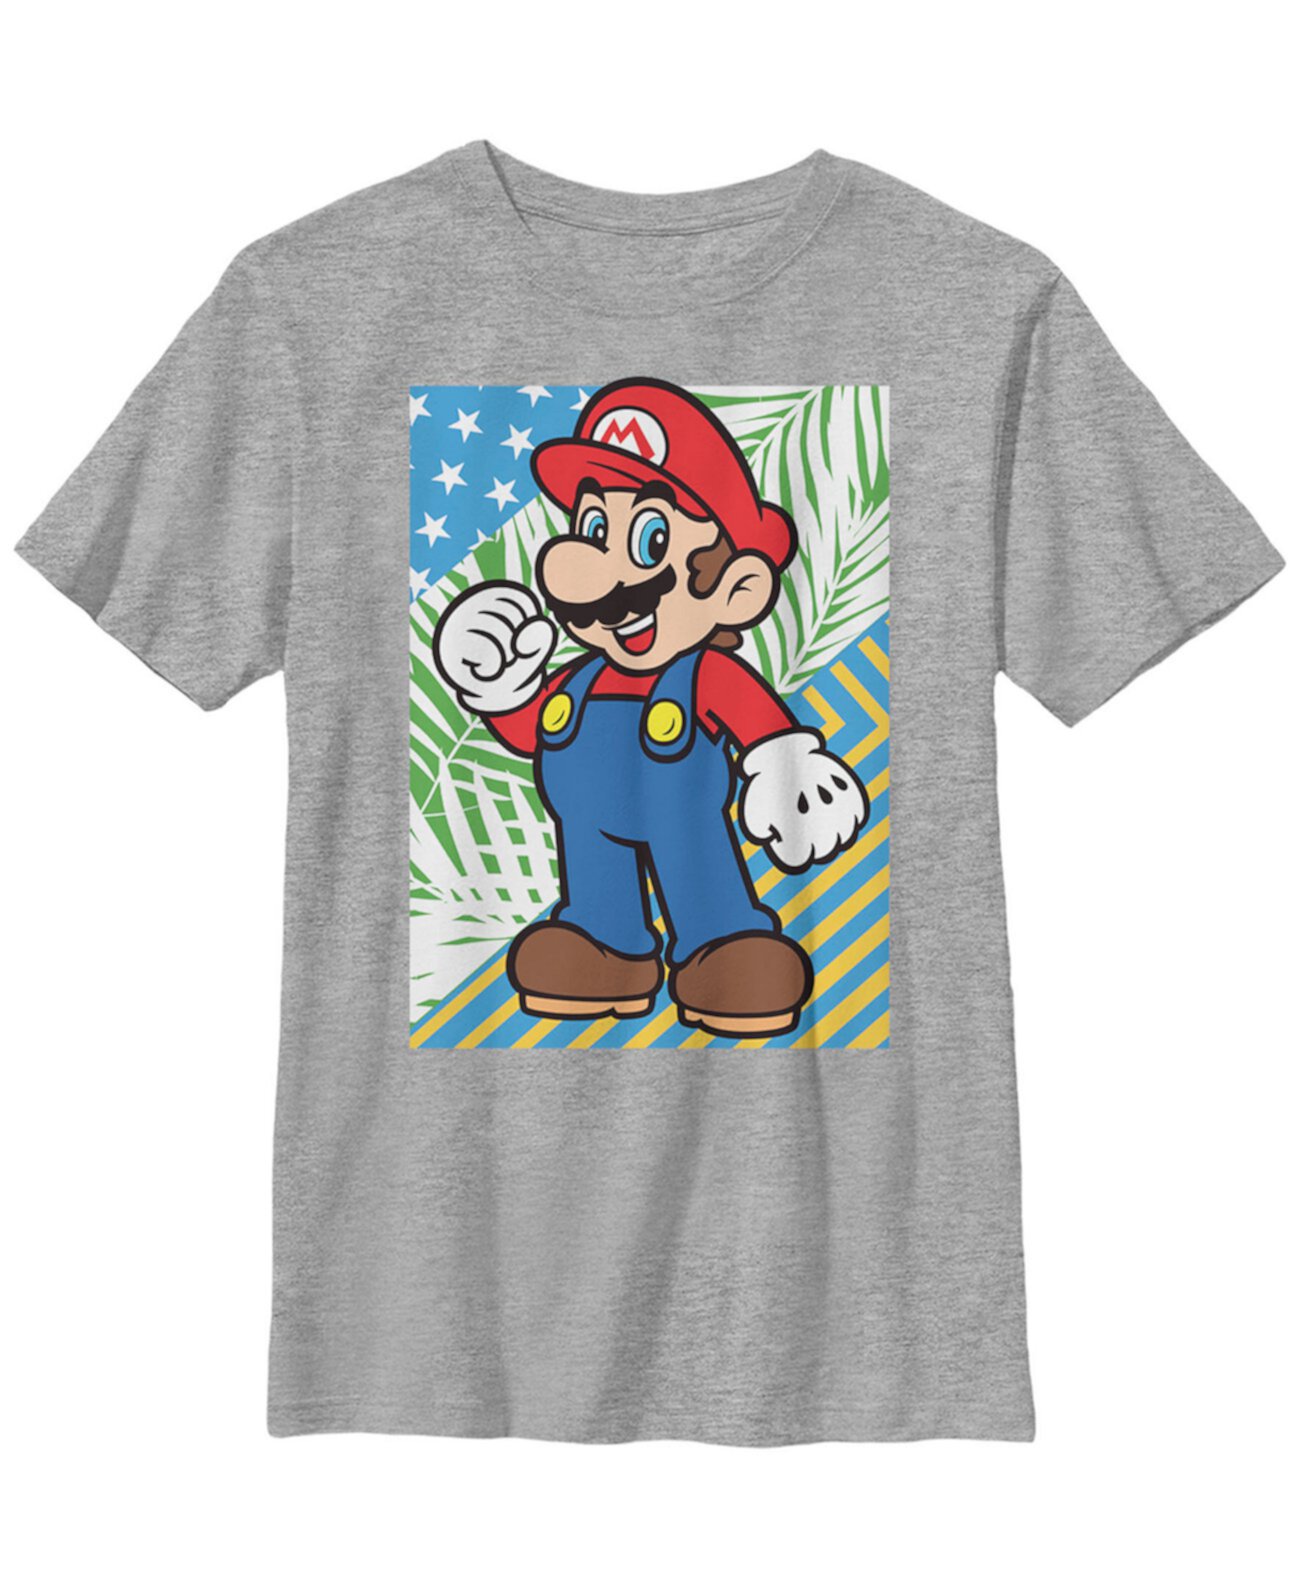 Футболка с короткими рукавами и портретом Super Mario с тропическим флагом Nintendo Big Boy FIFTH SUN